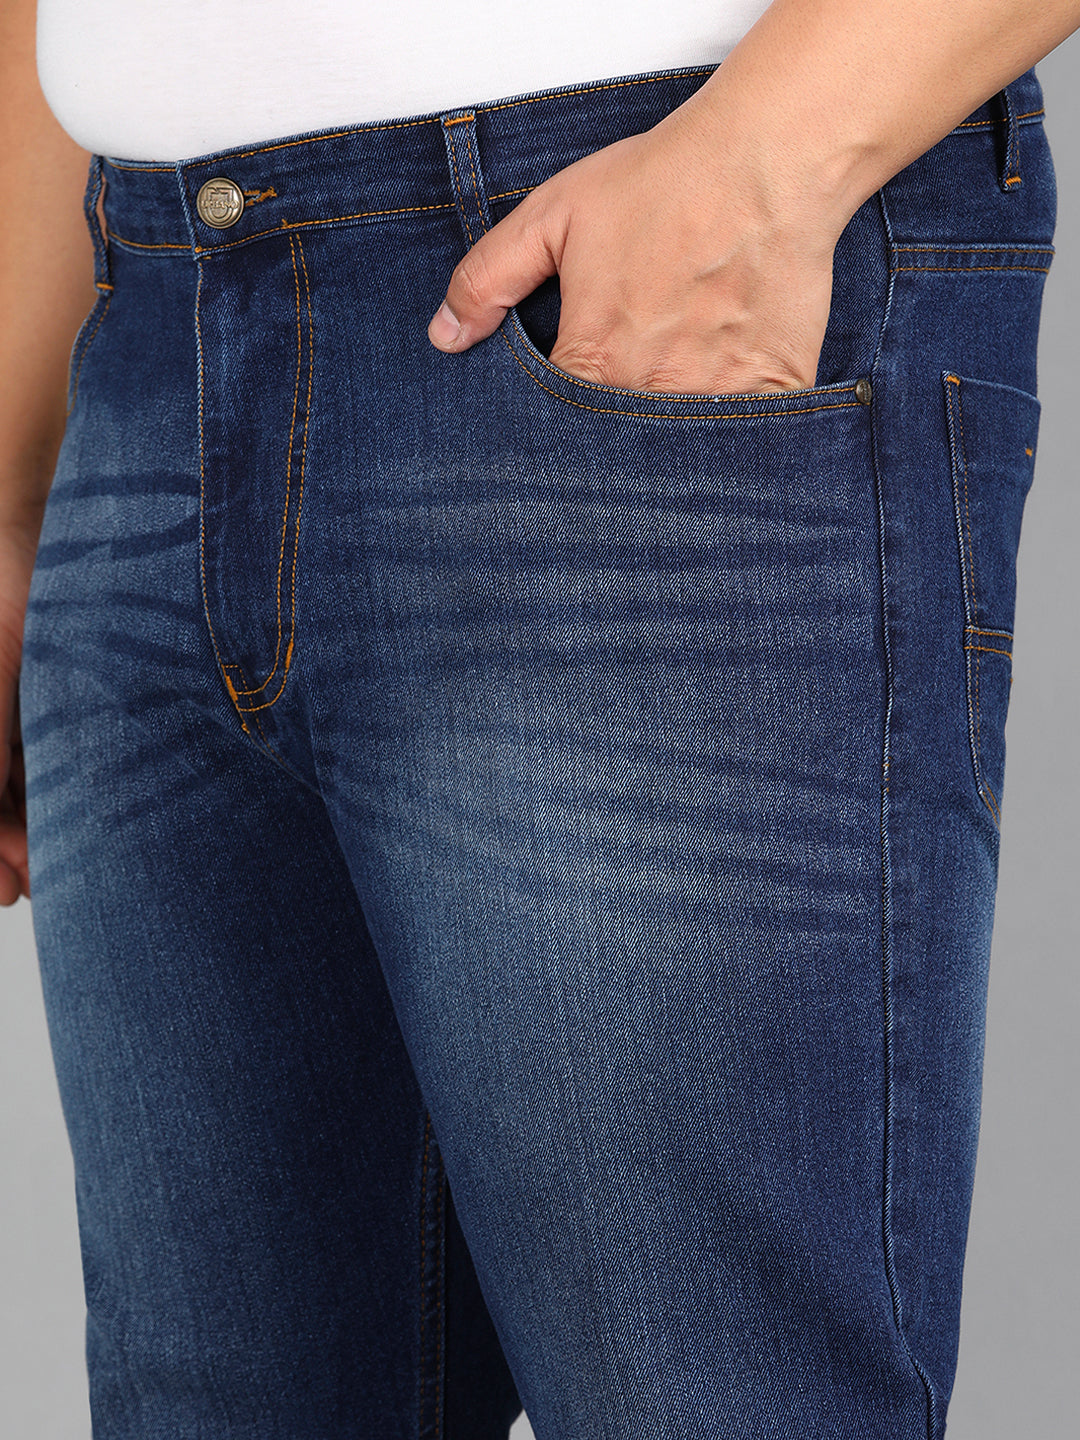 Plus Men's Blue Slim Fit Mild Distressed/Torn Jeans Stretchable